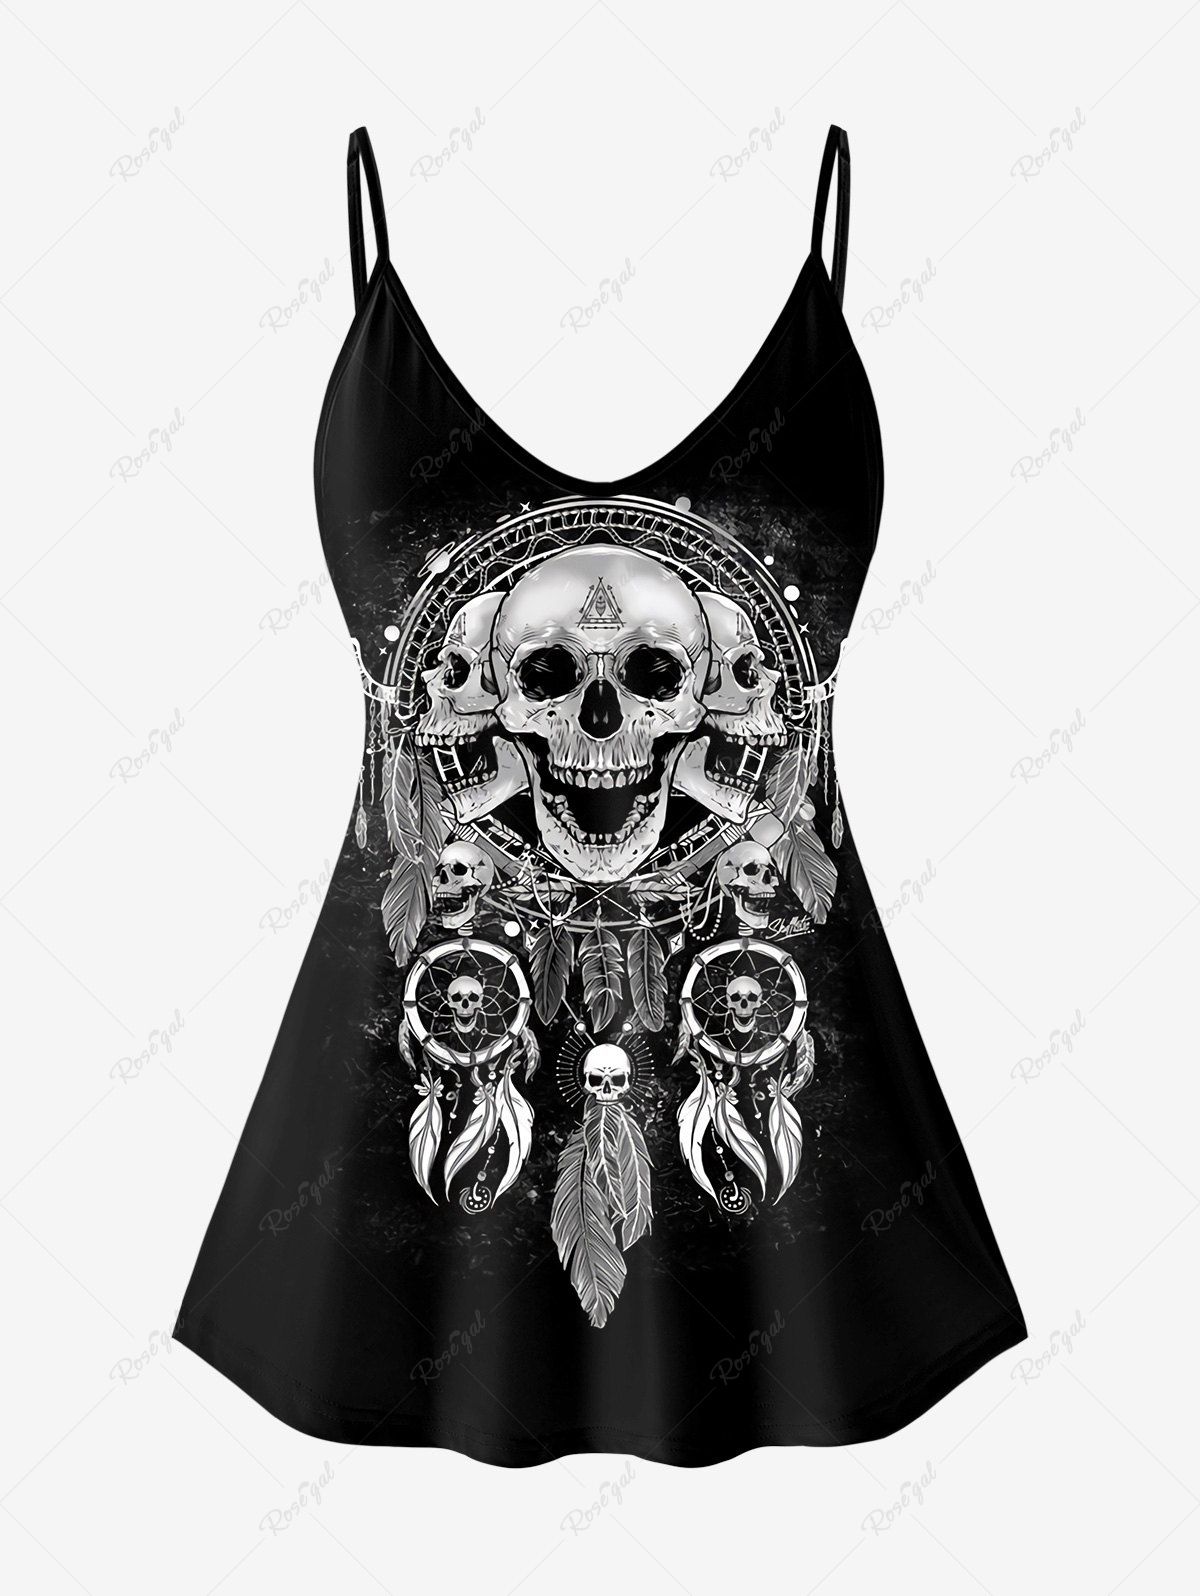 Trendy Gothic Skull Dreamcatcher Print Cami Top (Adjustable Straps)  